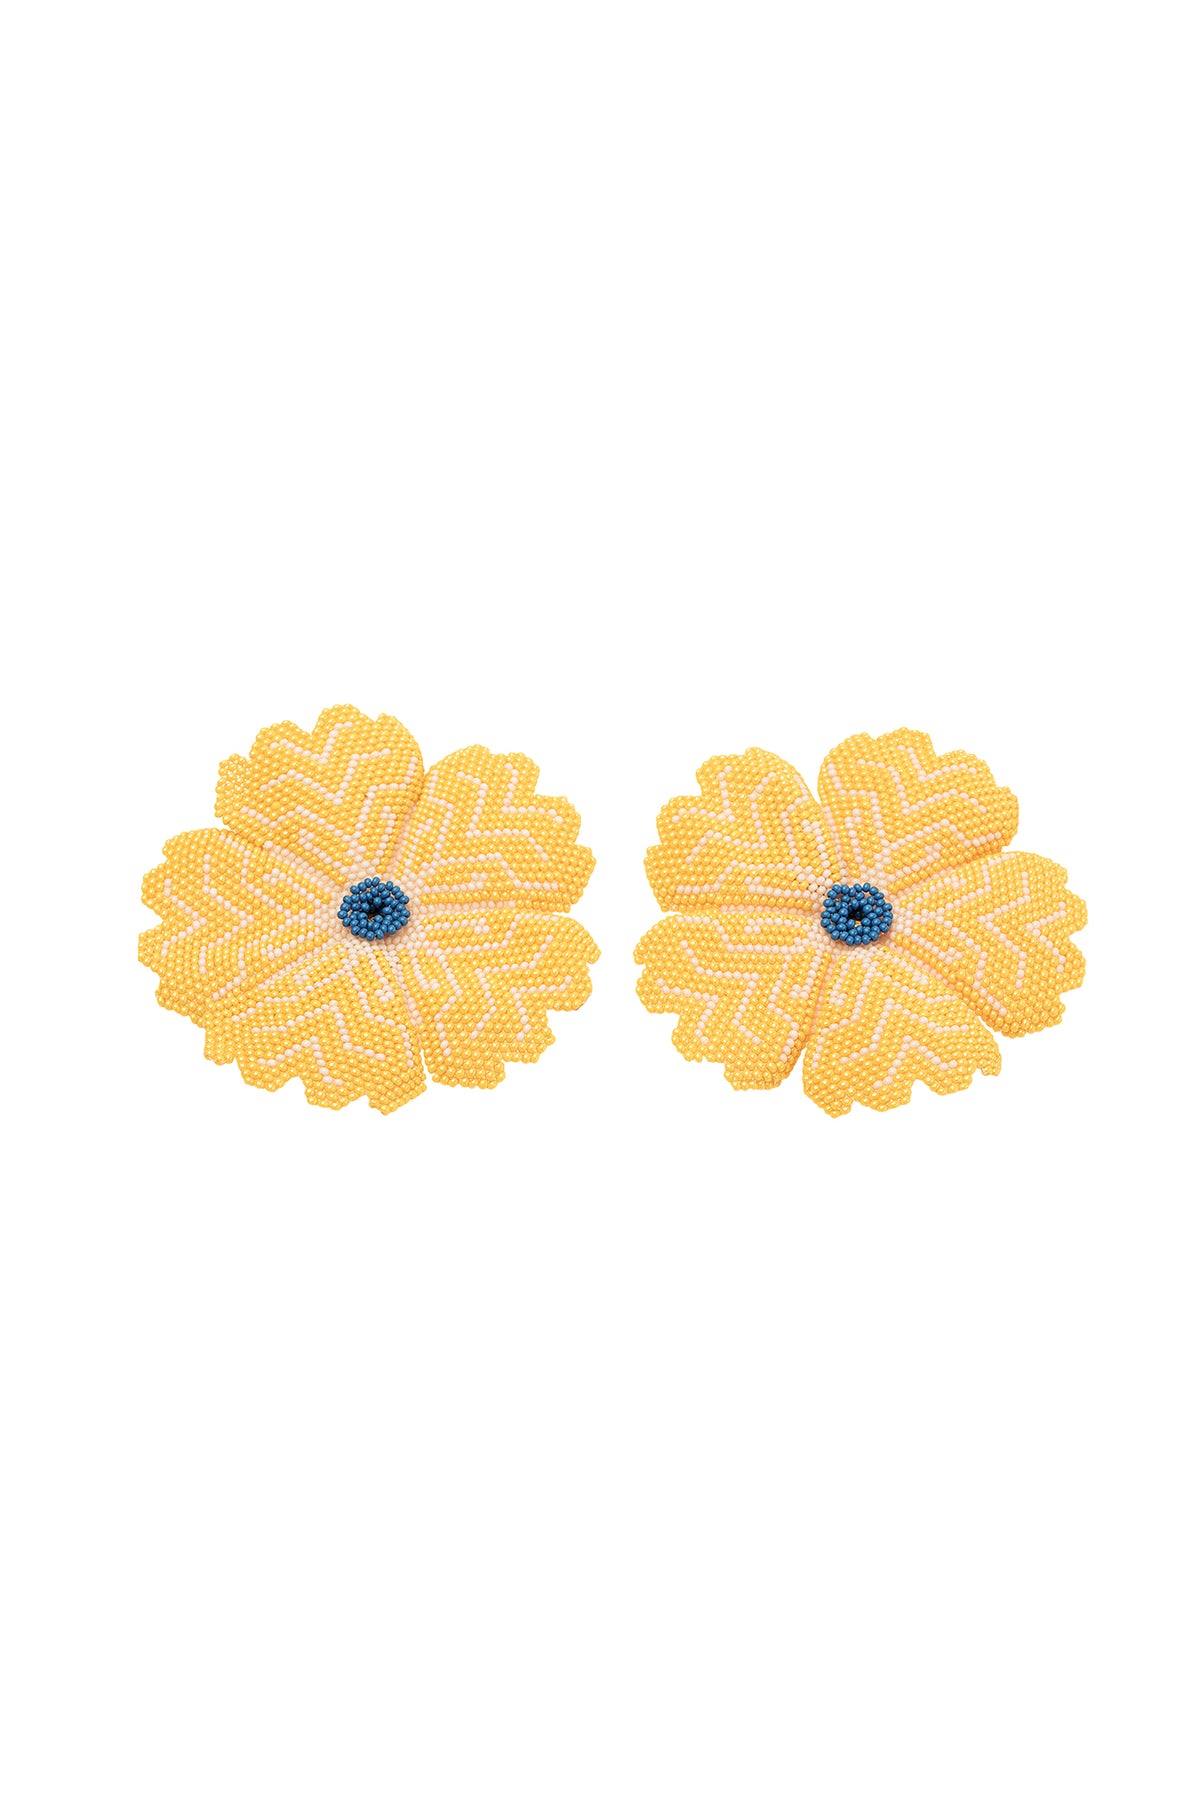 Carolina K Huichol Earrings in Yellow